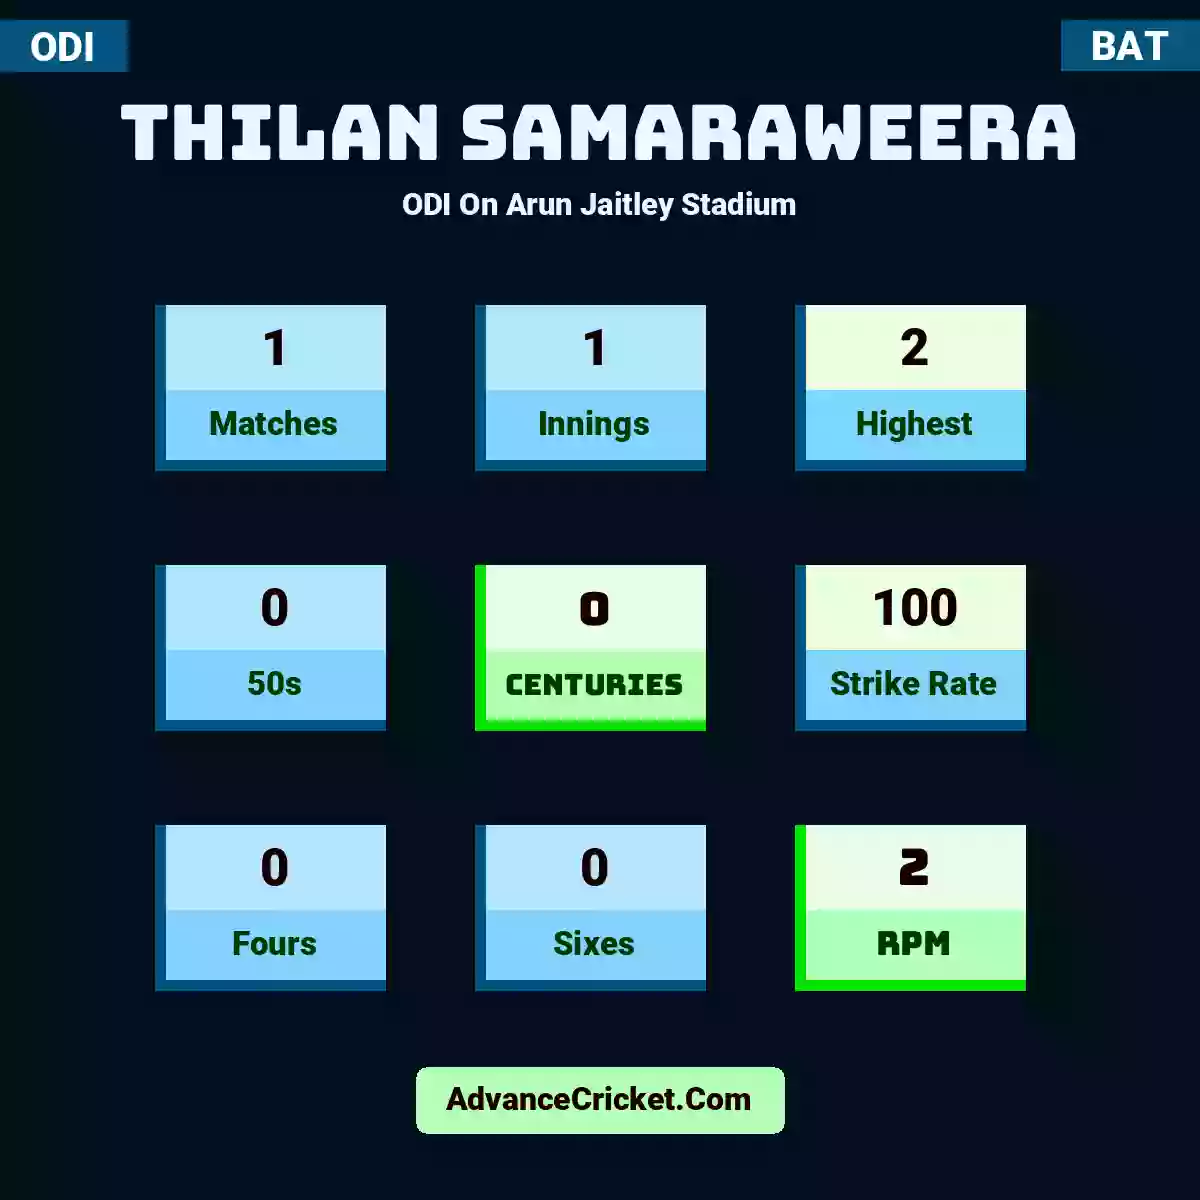 Thilan Samaraweera ODI  On Arun Jaitley Stadium, Thilan Samaraweera played 1 matches, scored 2 runs as highest, 0 half-centuries, and 0 centuries, with a strike rate of 100. T.Samaraweera hit 0 fours and 0 sixes, with an RPM of 2.